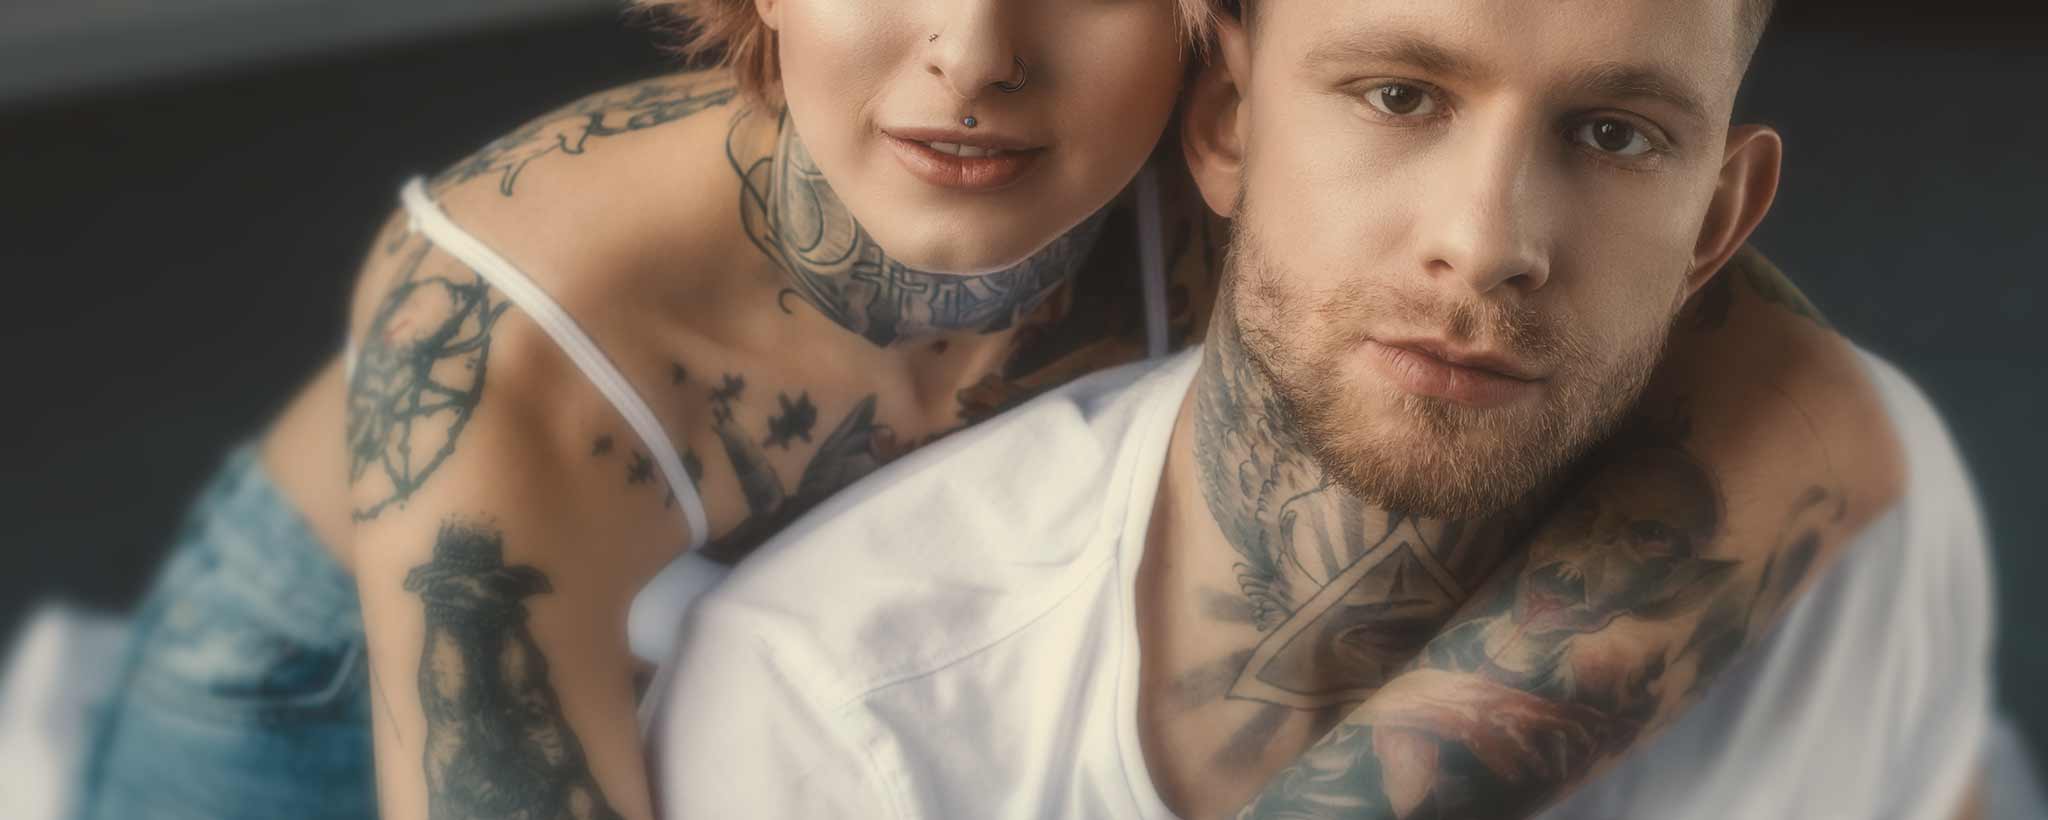 'Tattooed couple'